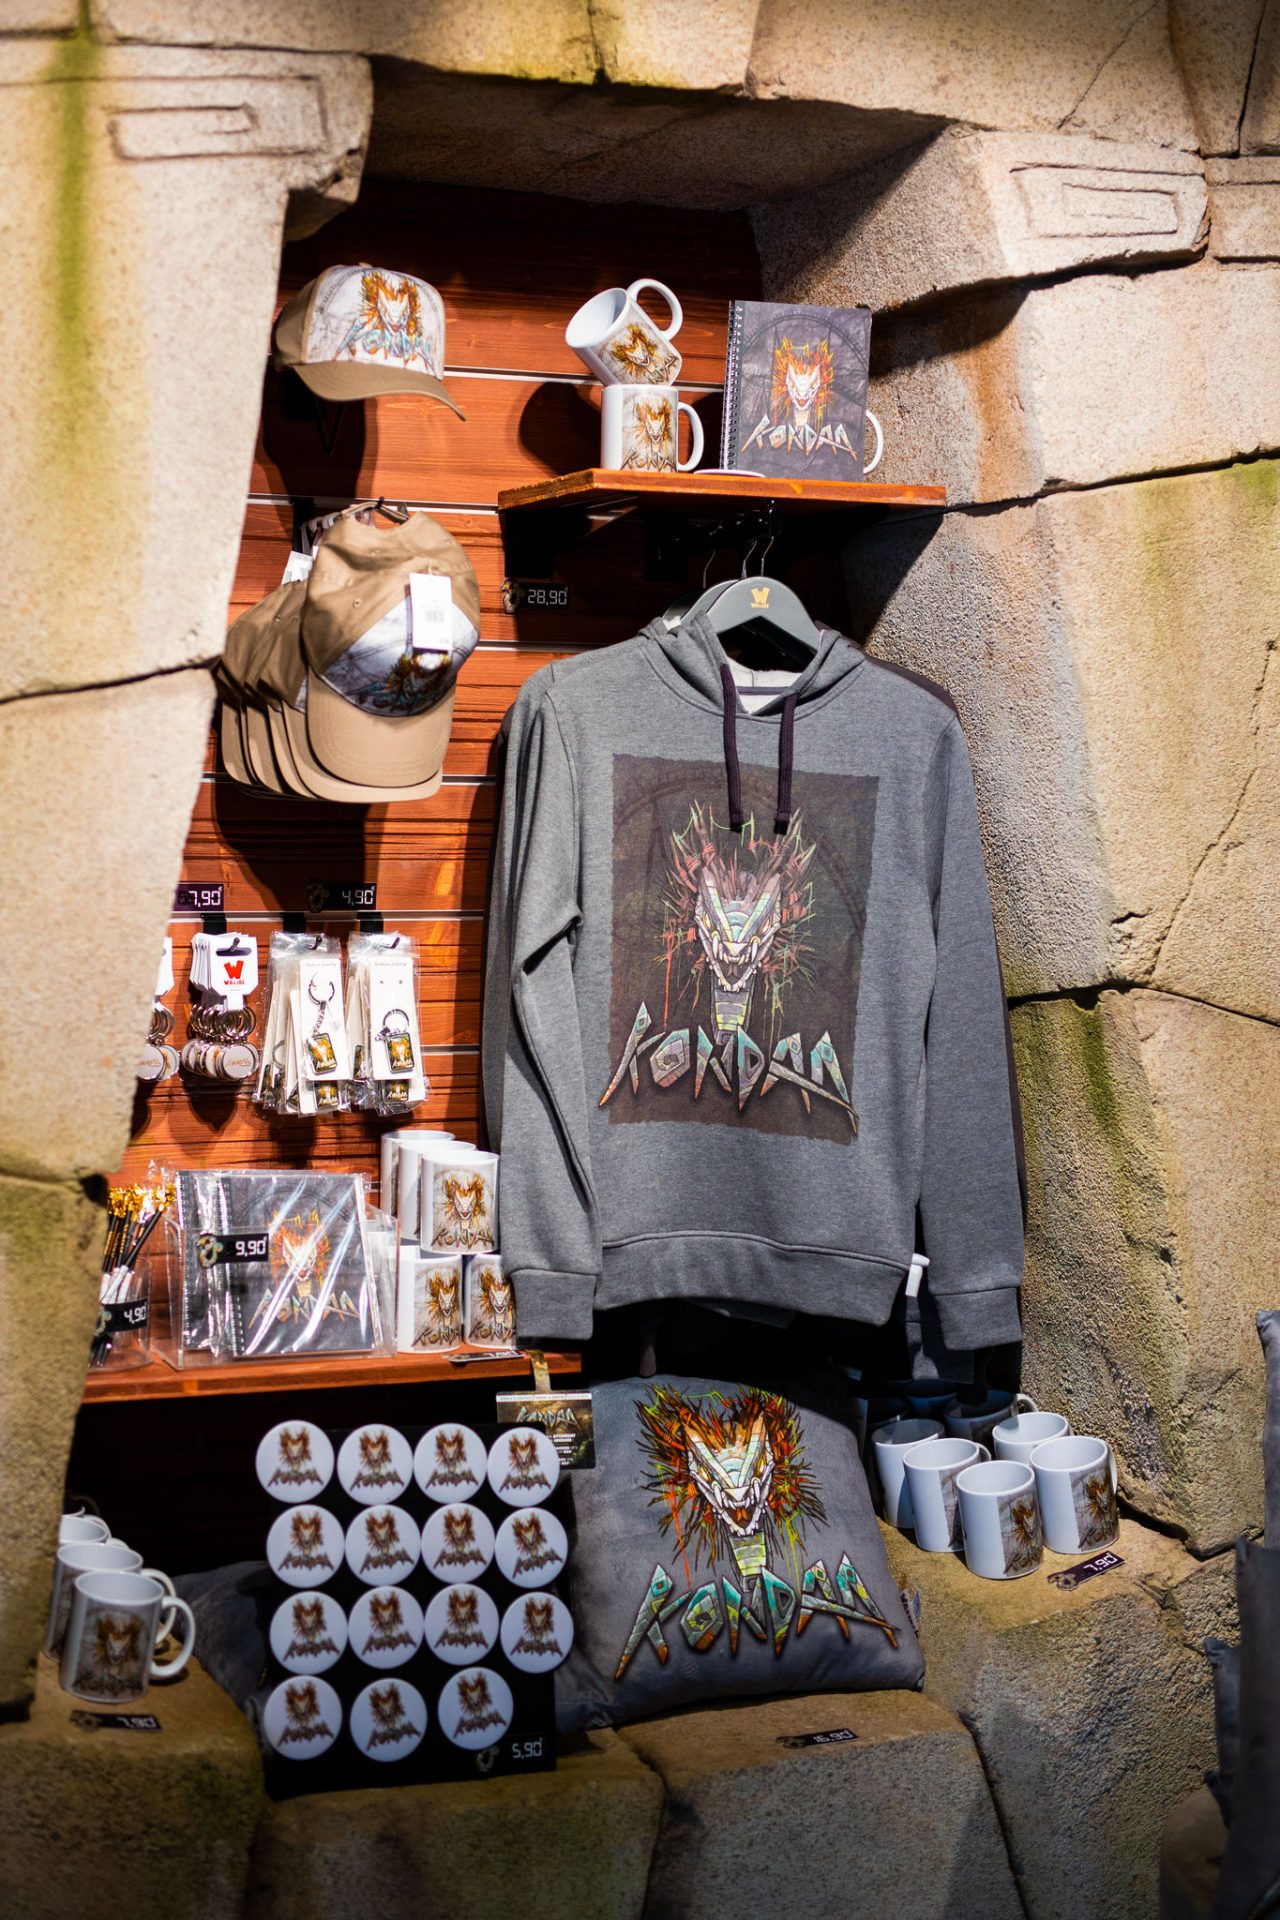 Boutique de souvenirs du Kondaa Walibi Belgium